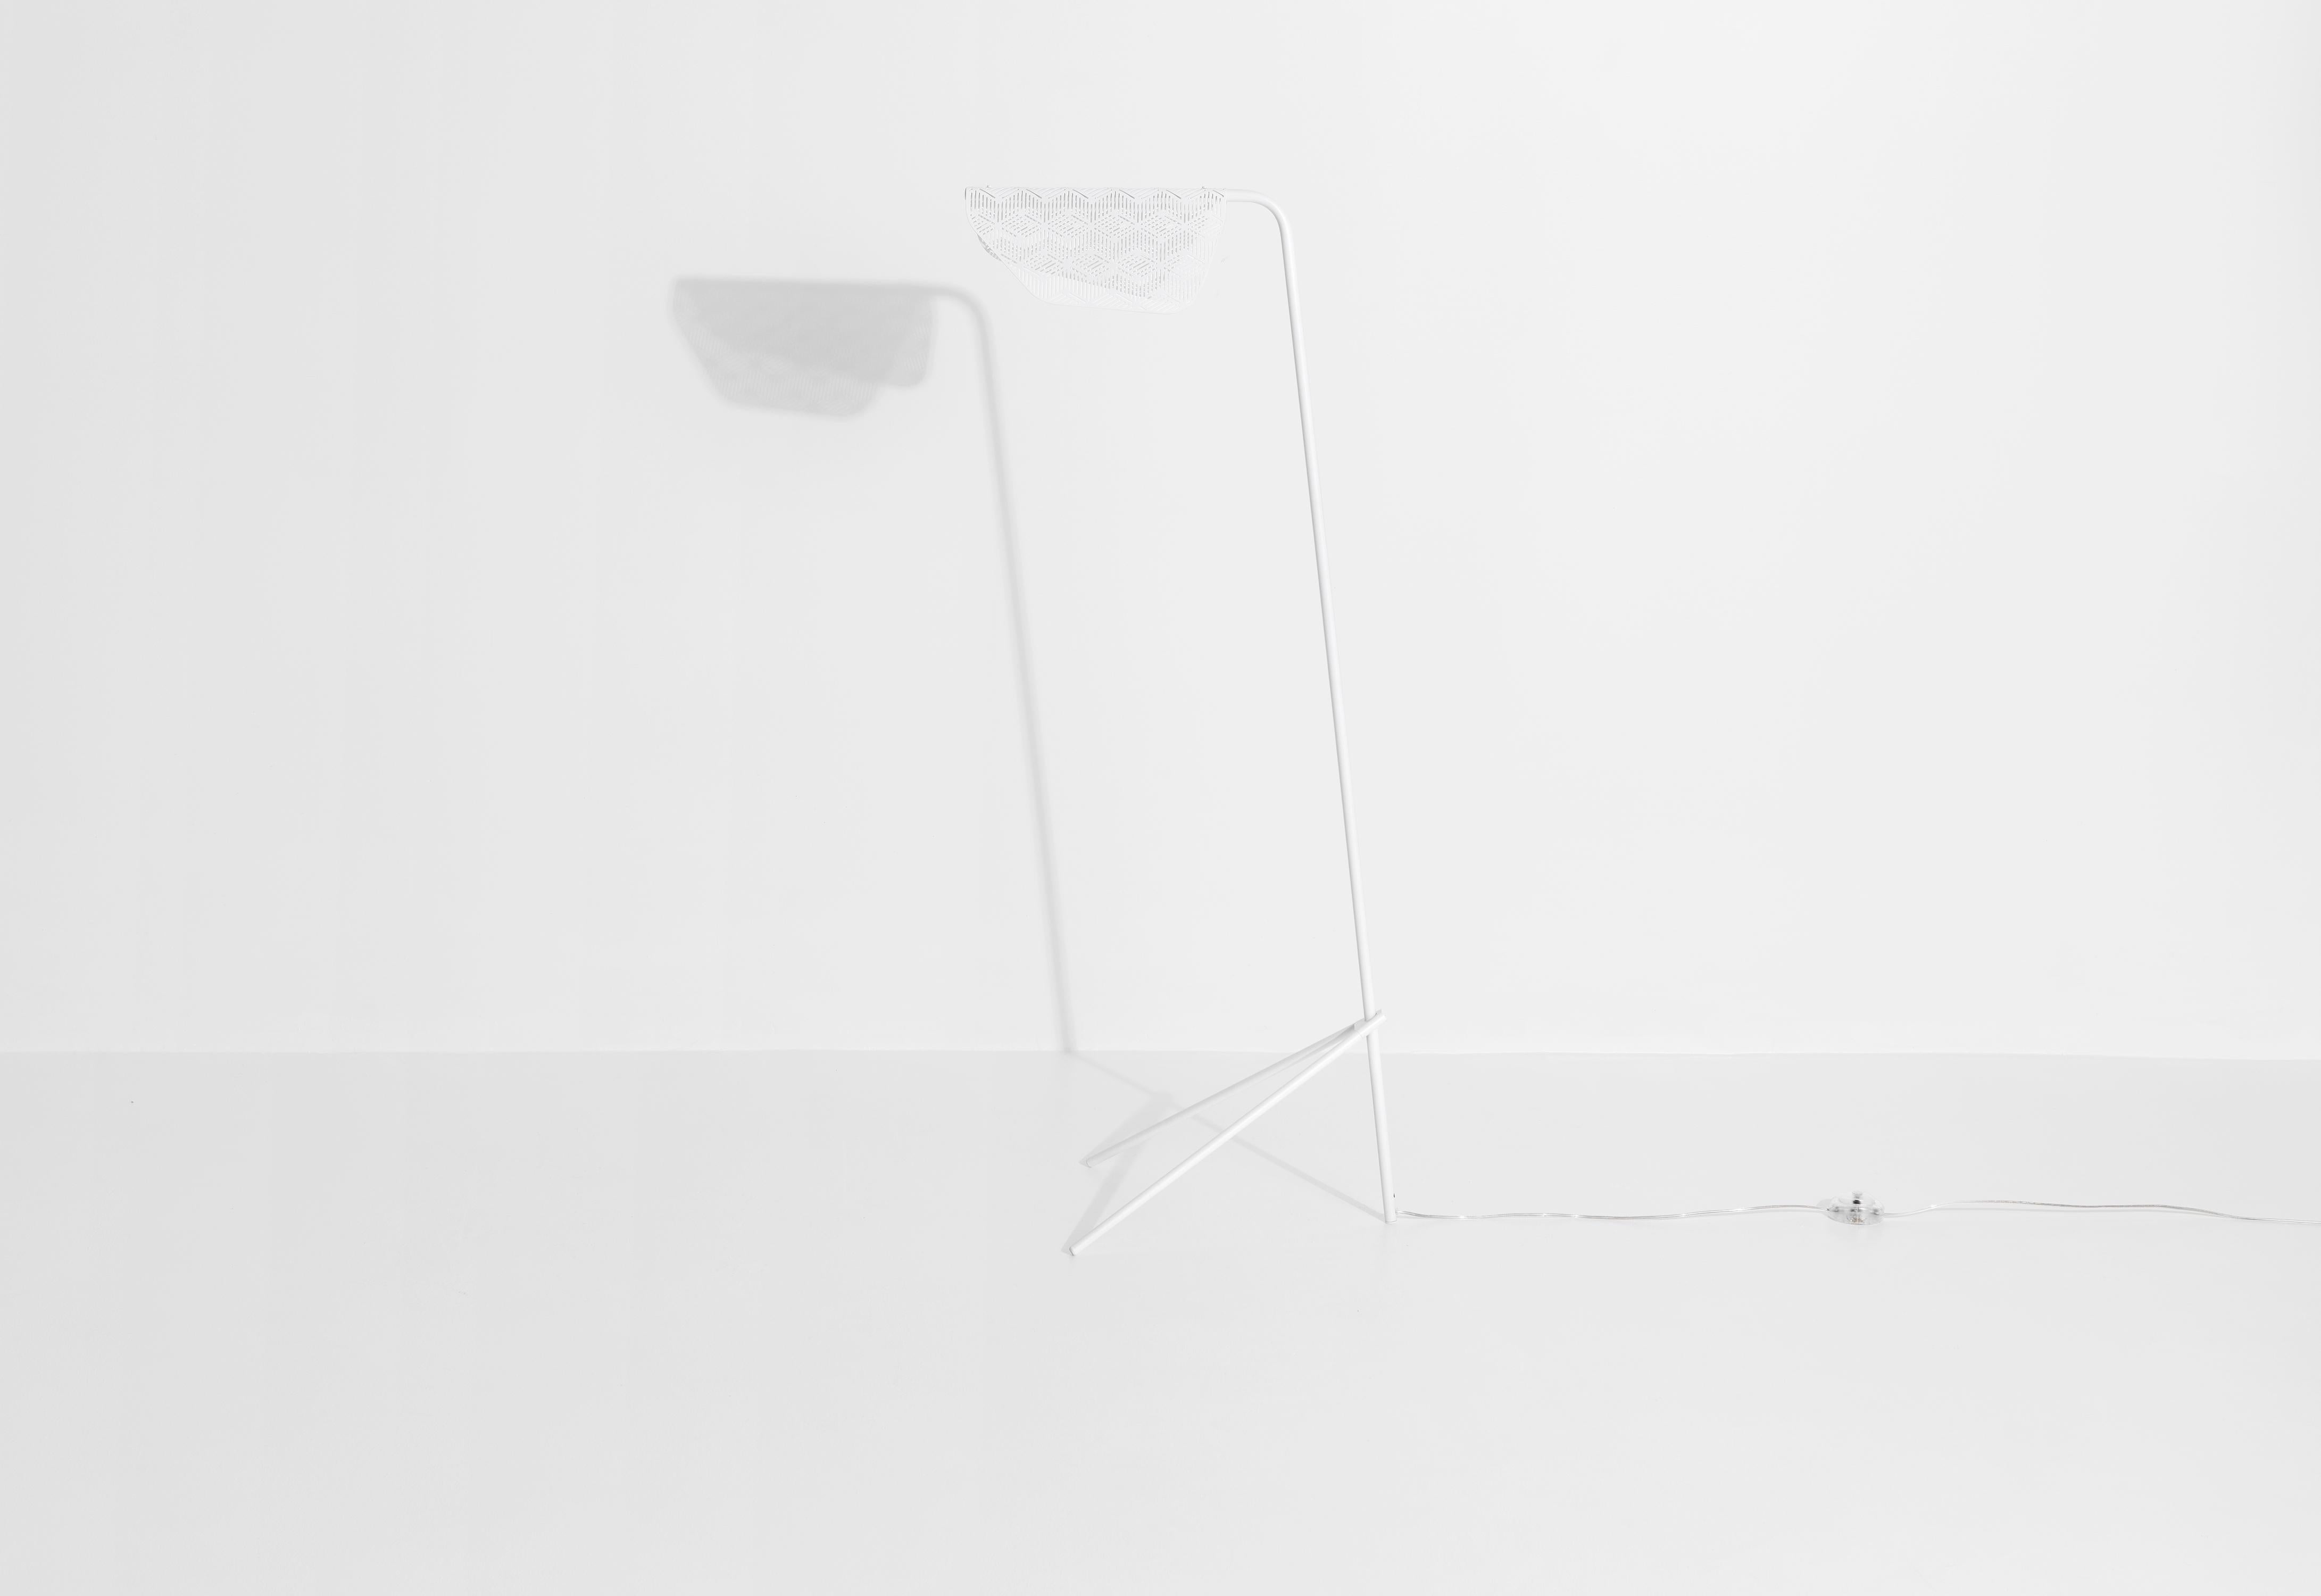 Contemporary Petite Friture Mediterranea Floor Lamp in White by Noé Duchaufour-Lawrance, 2016 For Sale